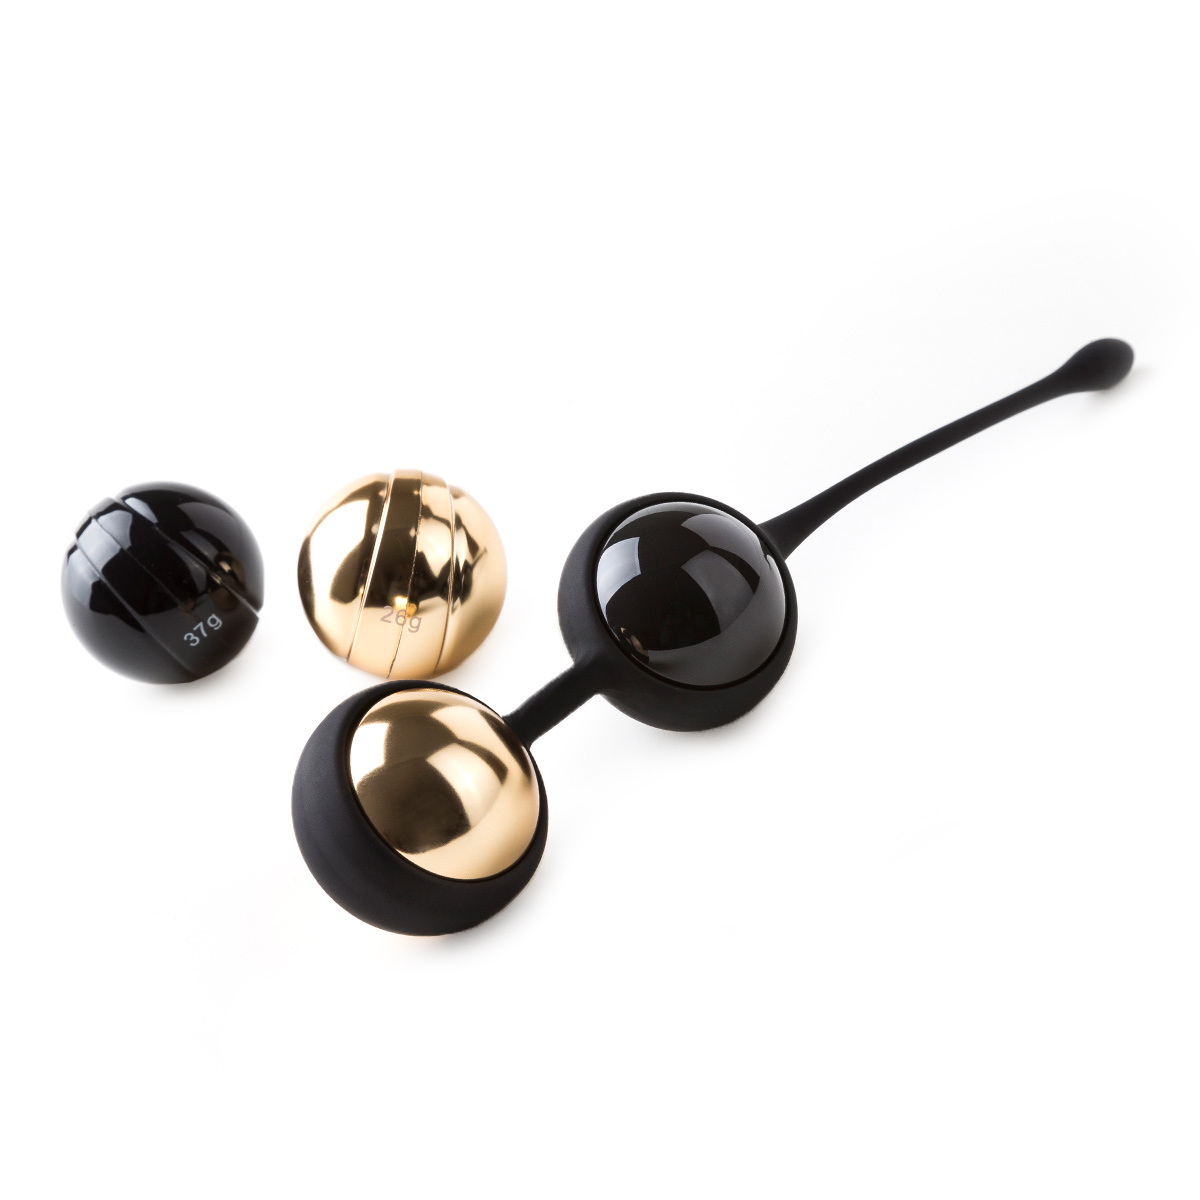 Geisha Balls Denae Kegel Balls – Black & Gold